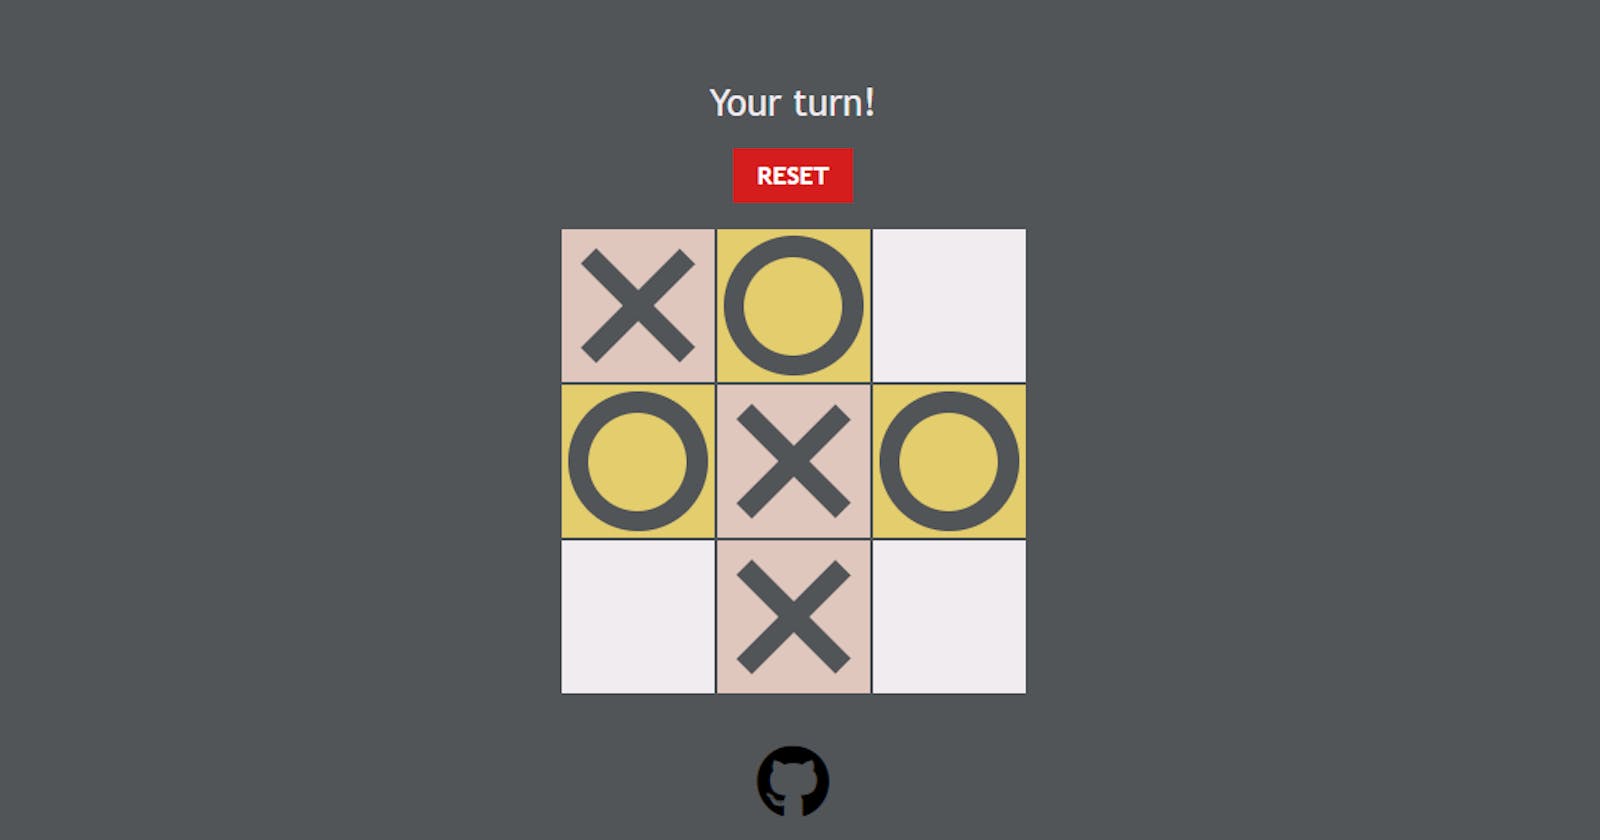 Making a simple Tic-Tac-Toe game in JavaScript